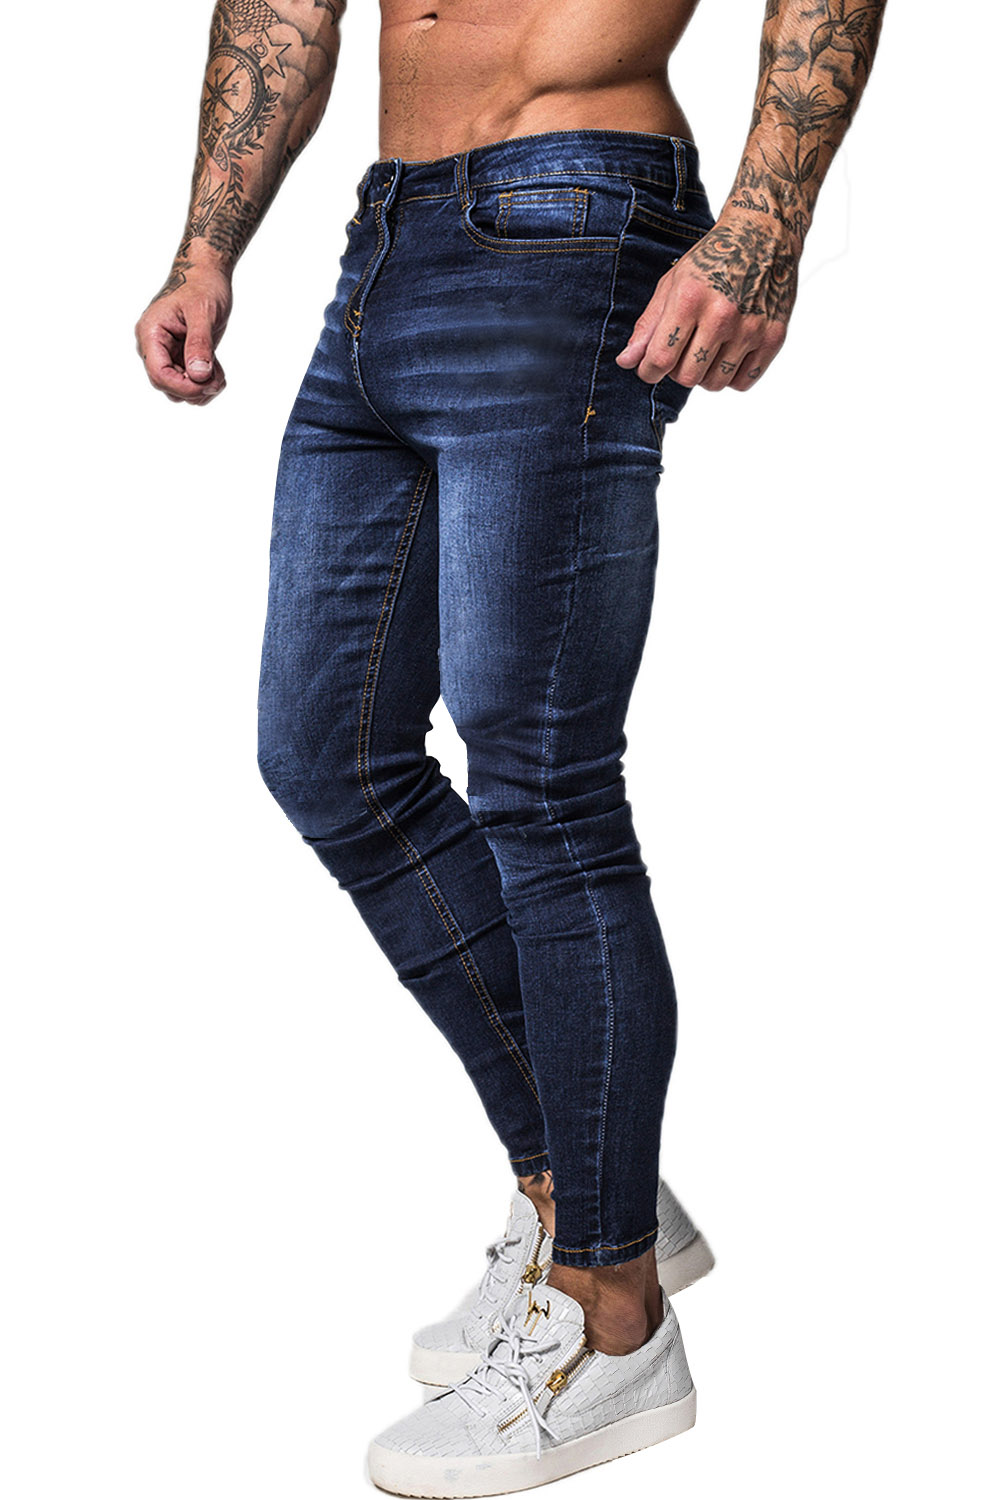 Jeans Cloth 1001x1500